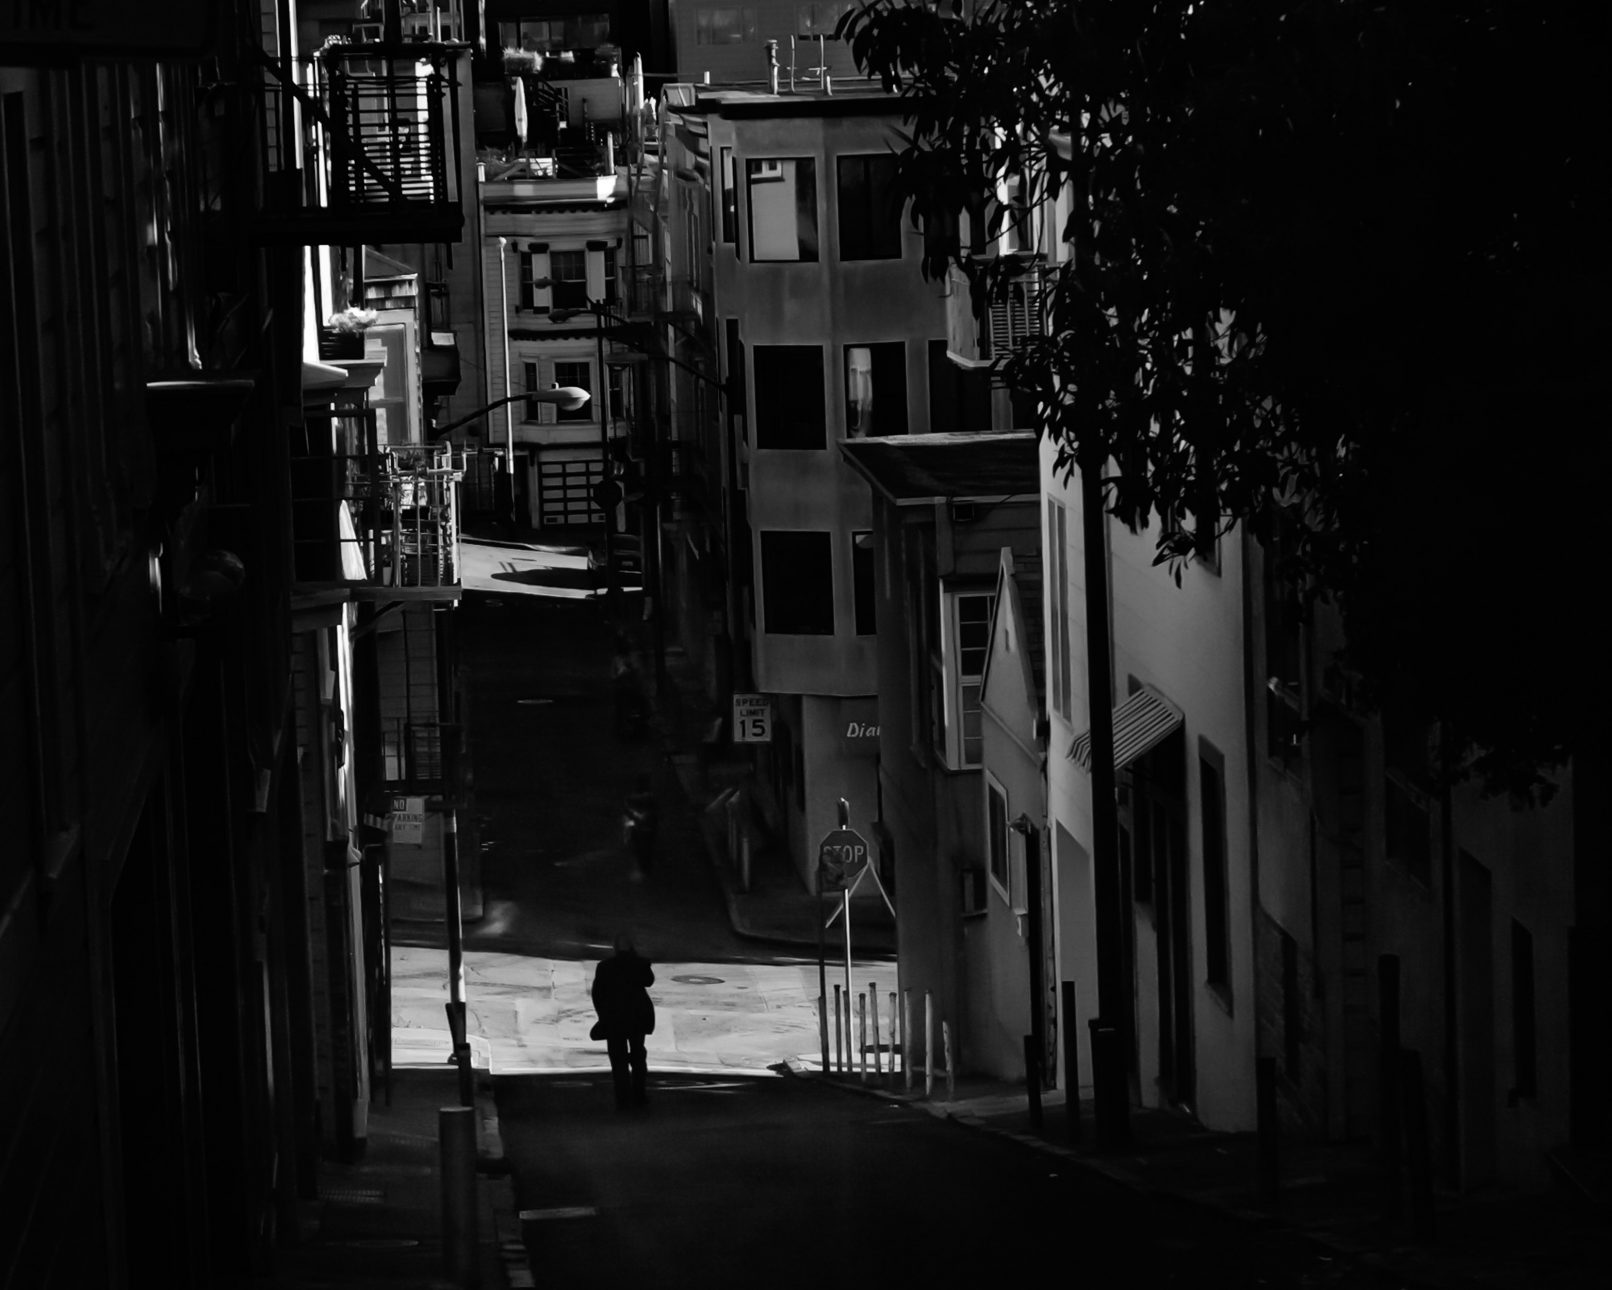 Man on street in San Francisco with dark shadows